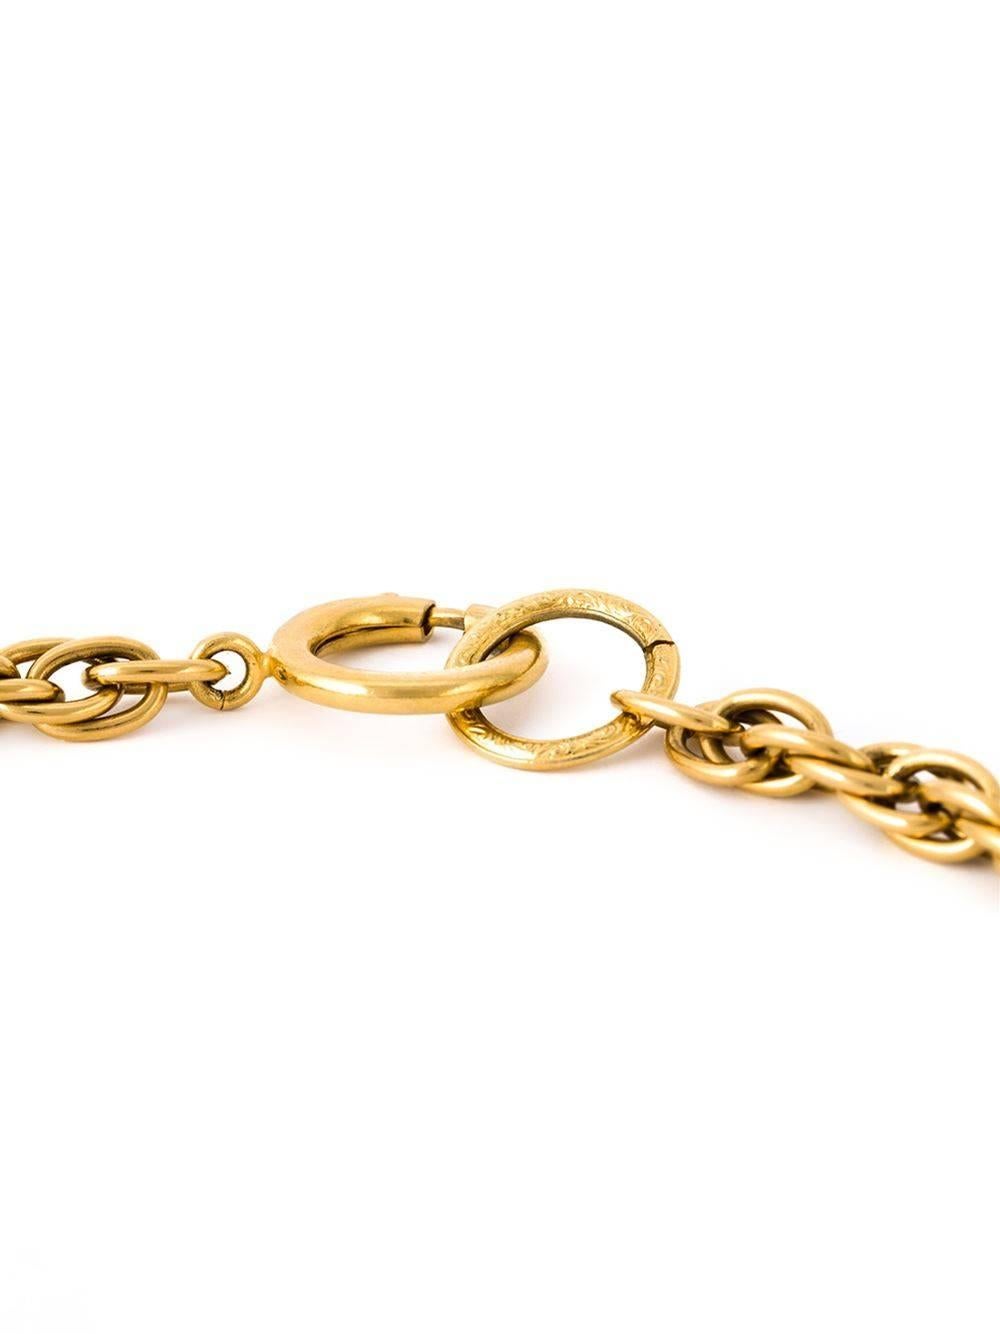 White Chanel Golden Metal Vintage Necklace, 1990s